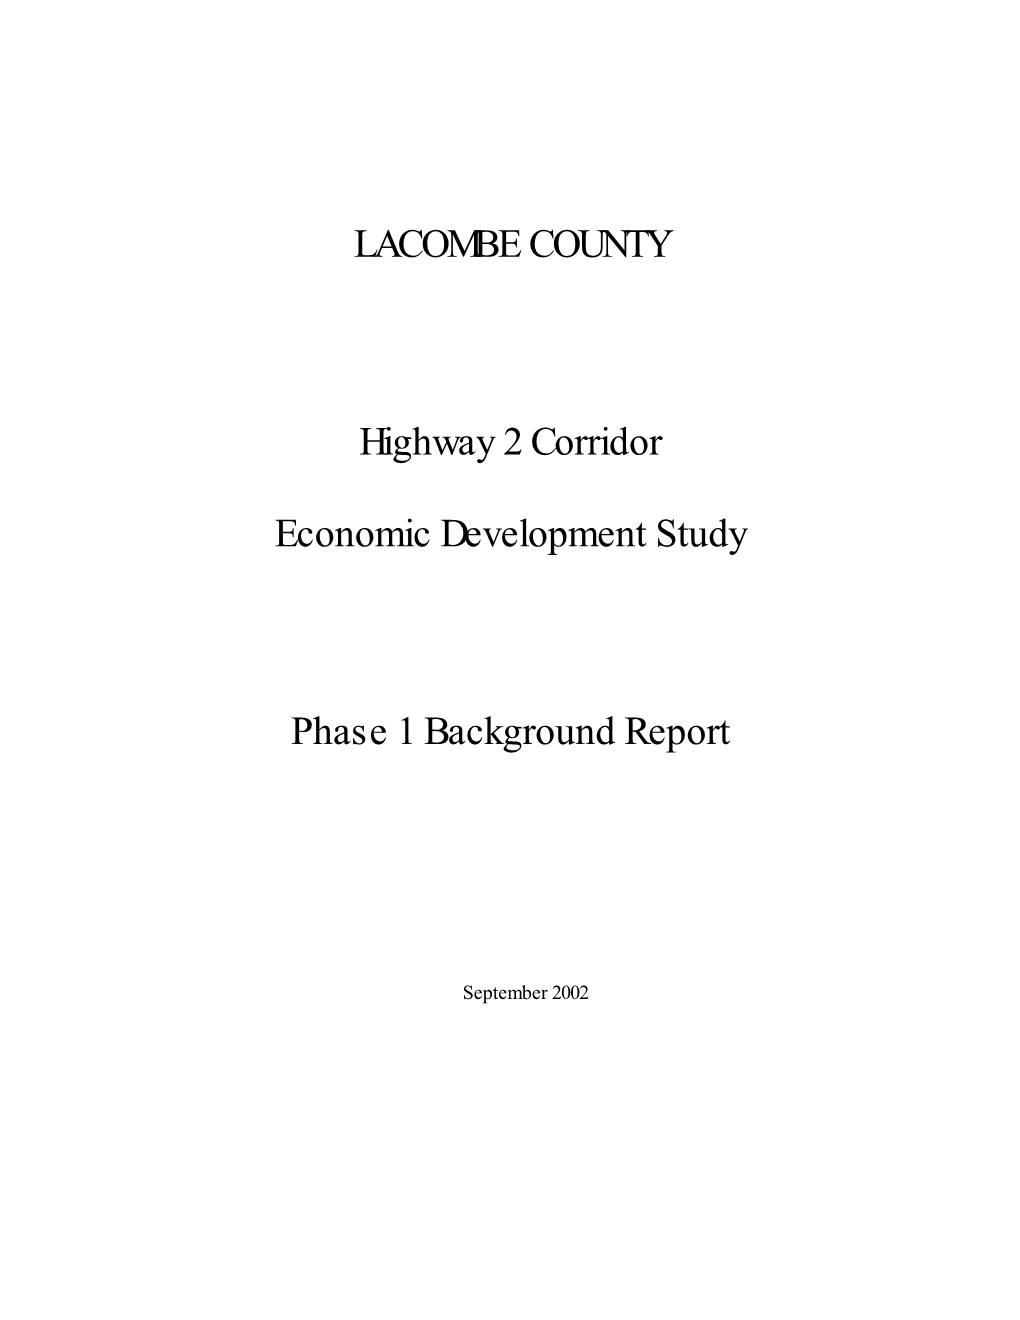 Highway 2 Corridor Economic Development Study Background Report Table of Contents 1